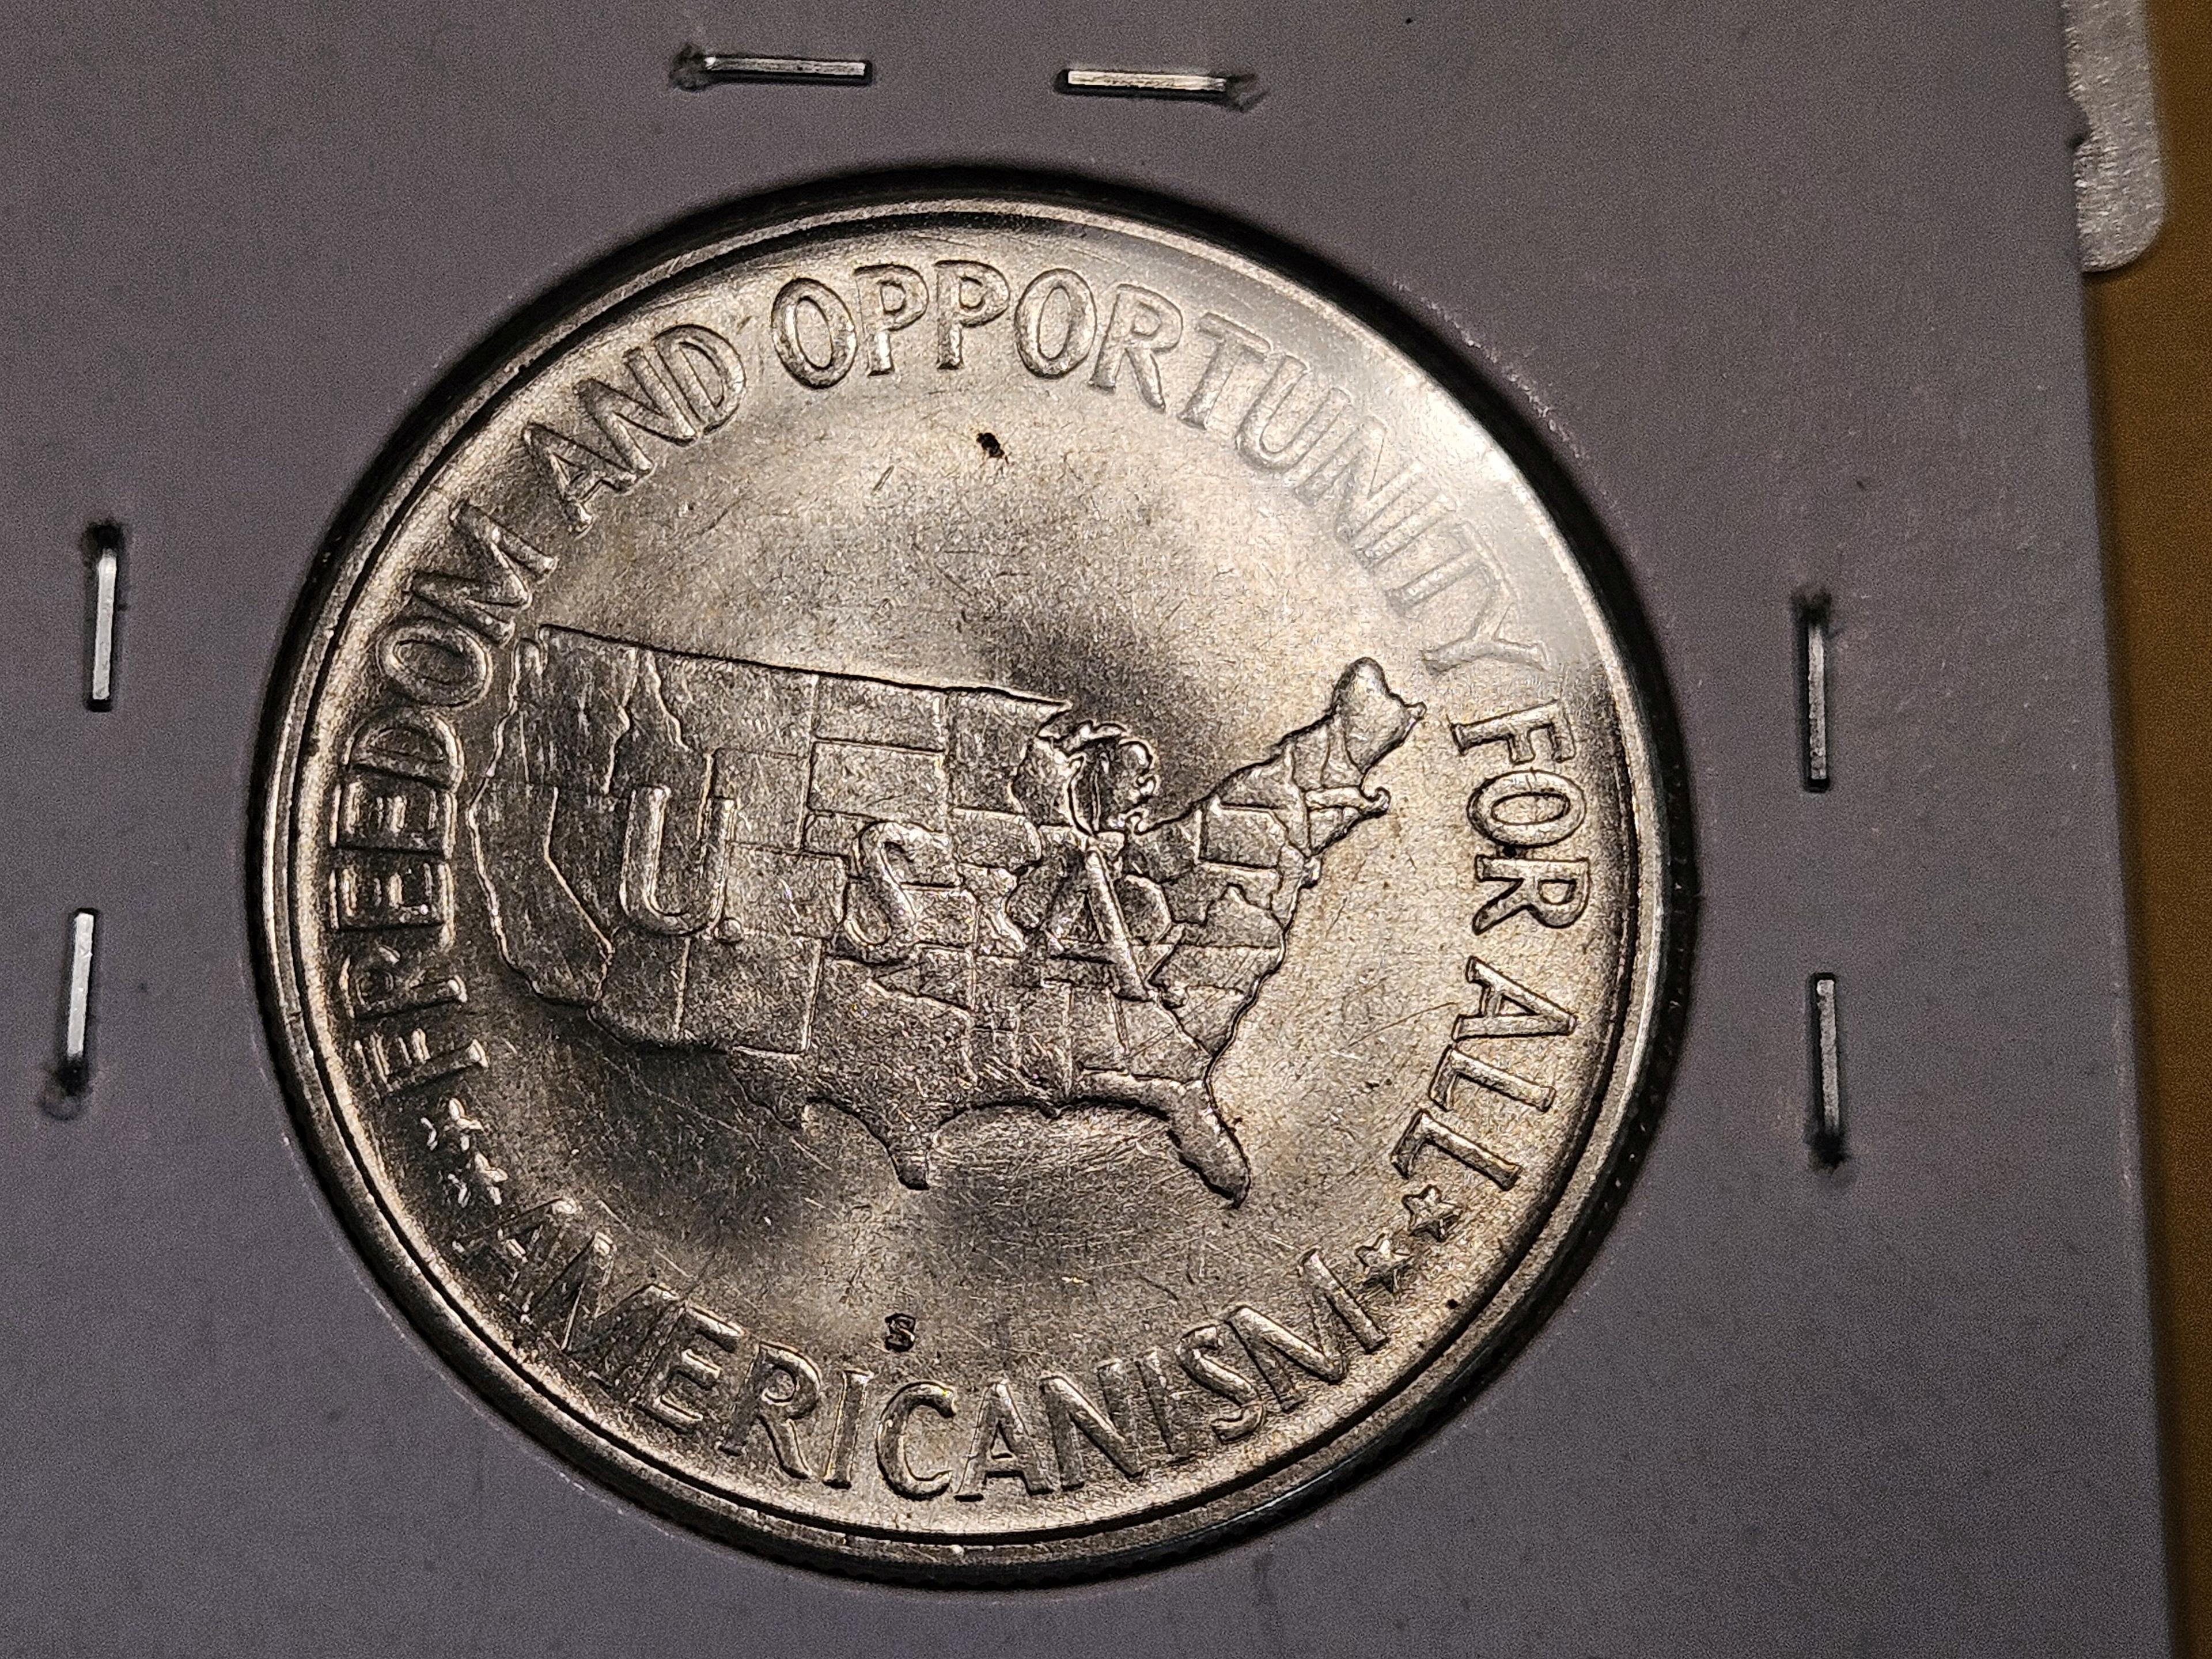 Choice Brilliant Uncirculated 1953-S Commemorative silver half dollar